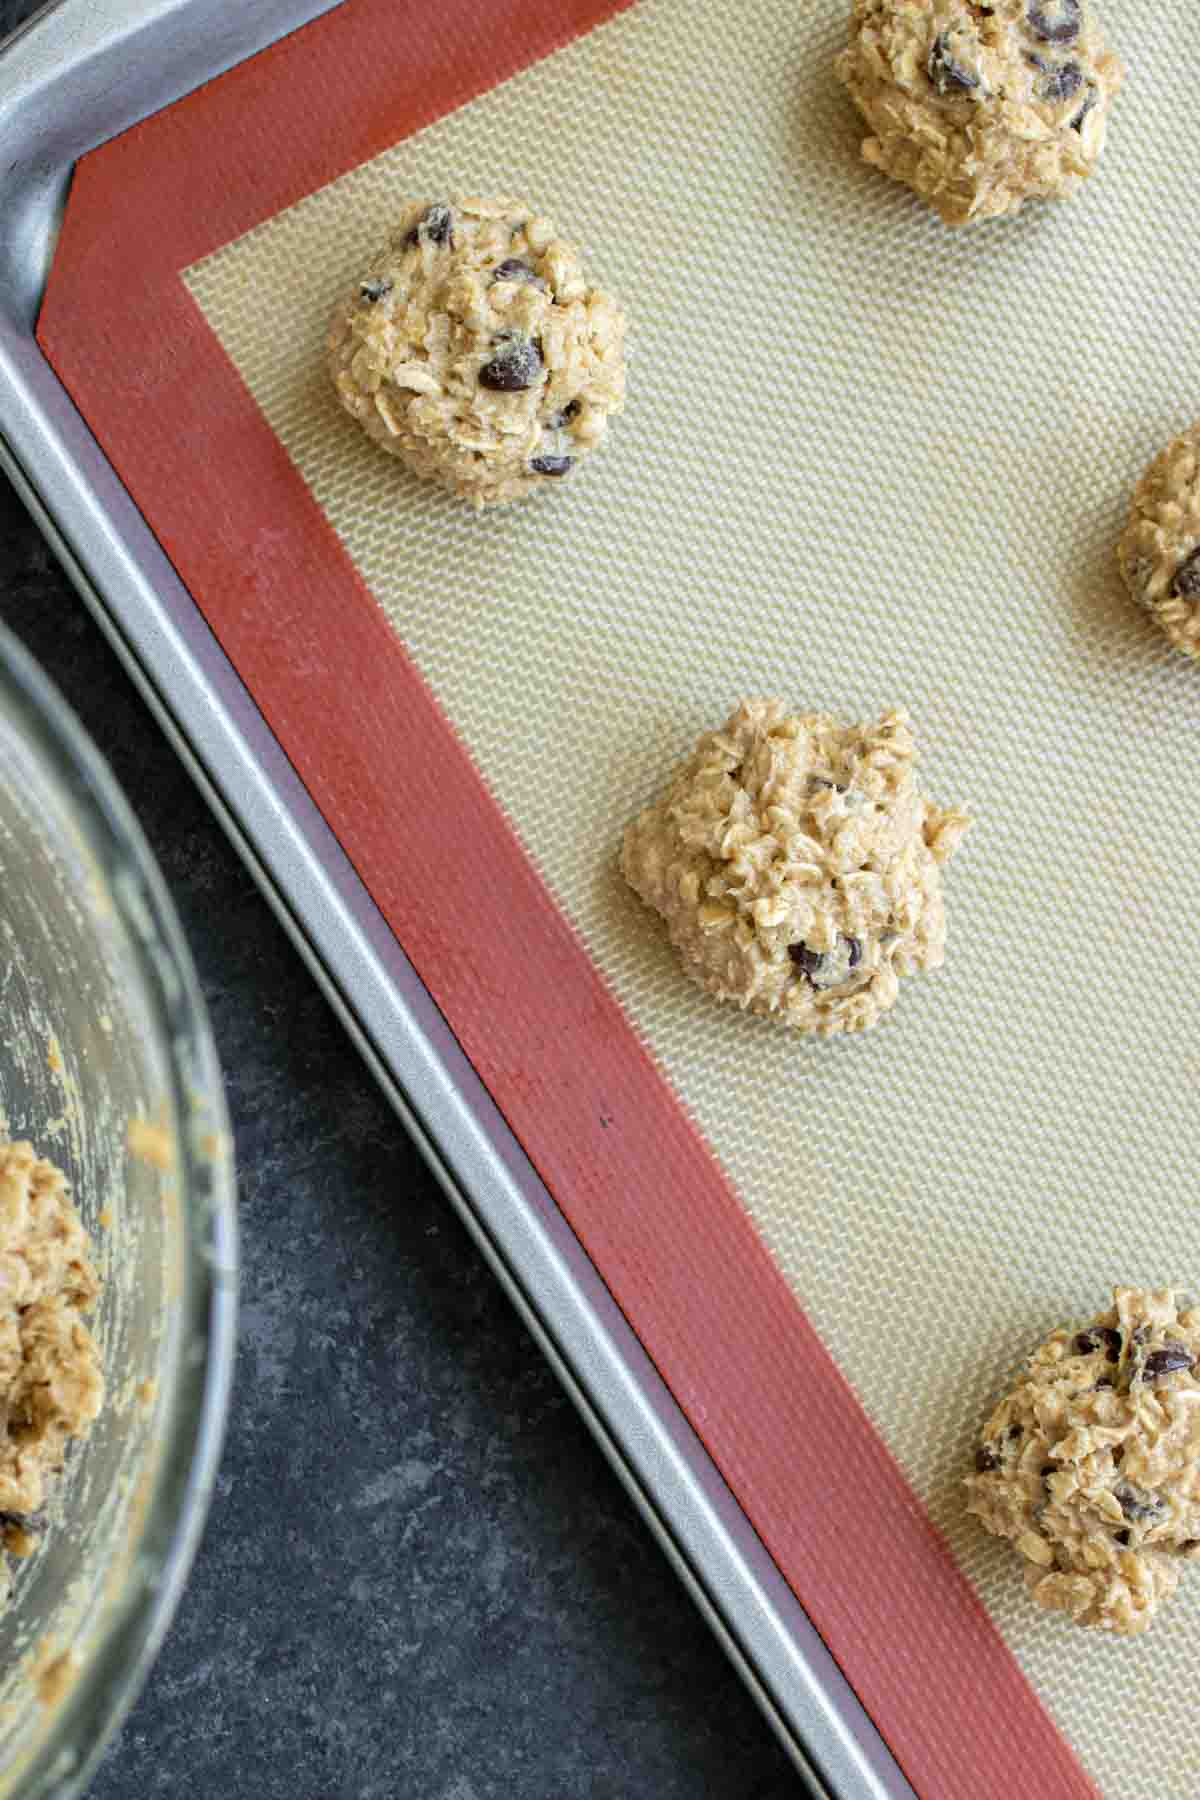 Ranger Cookies dough rolled into balls on sheet pan